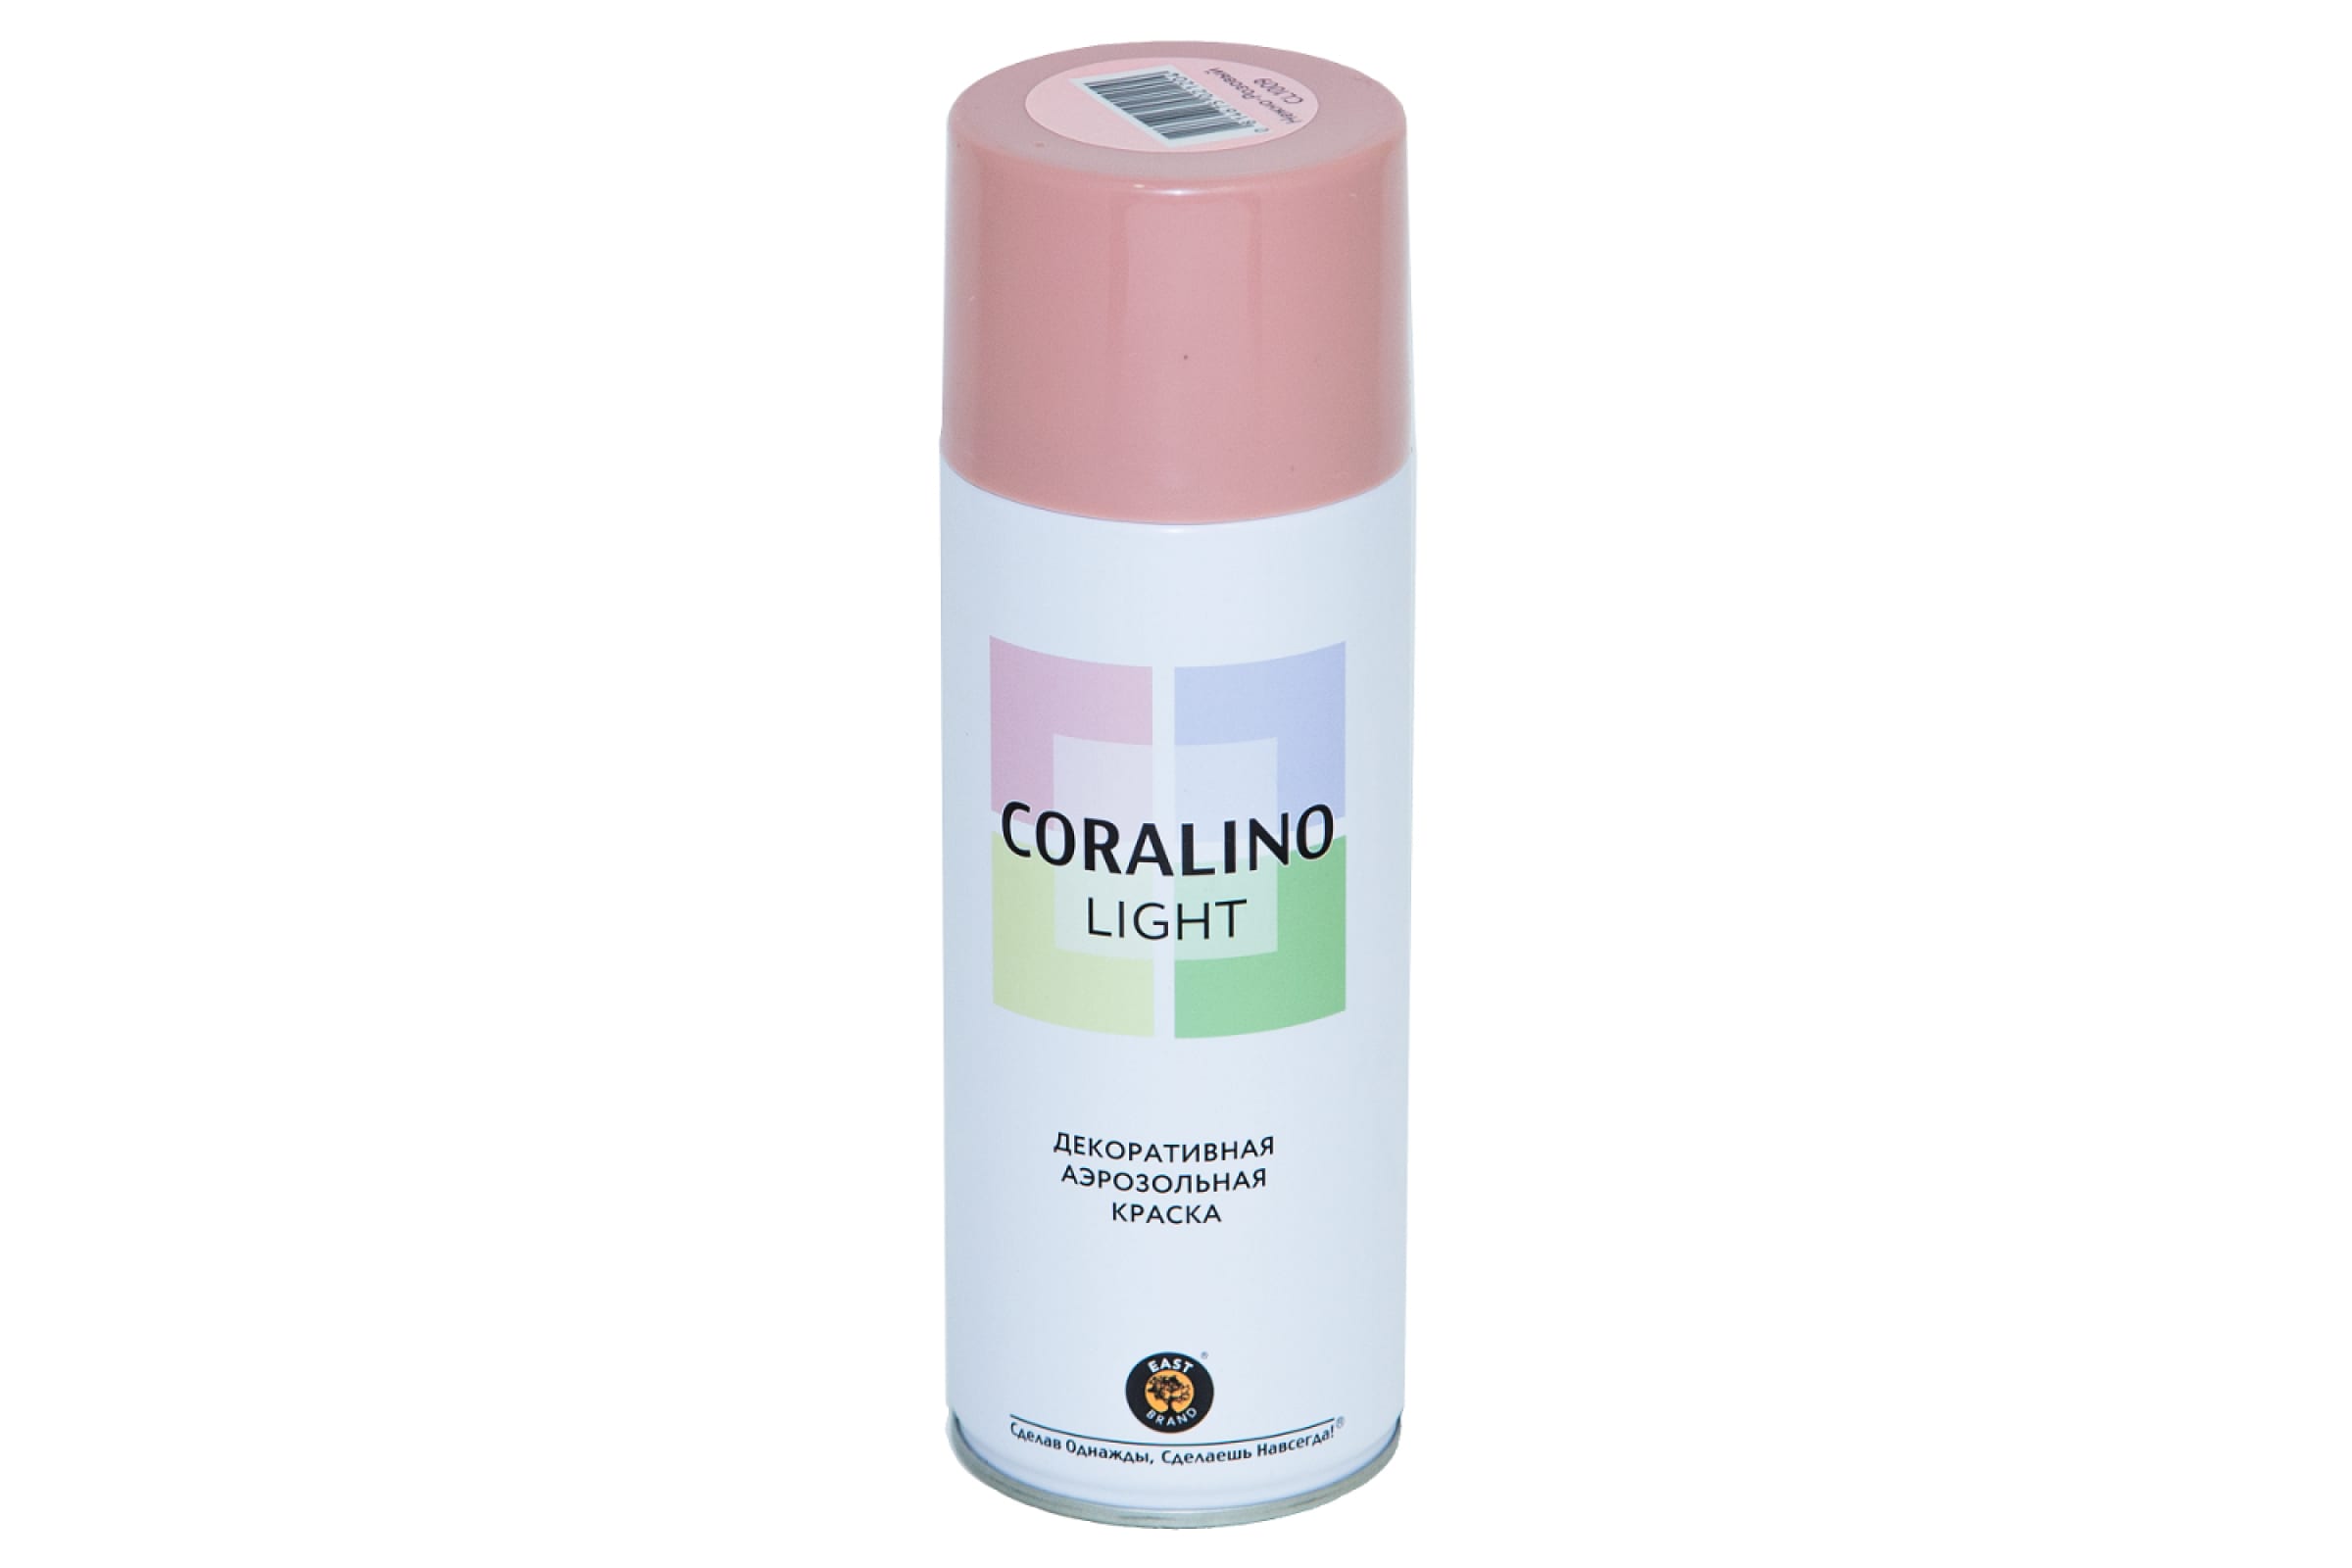 CORALINO LIGHT Краска аэроз. декоративная , Нежно розовый CL1009 кеды для кукол длина подошвы 5 см нежно розовый